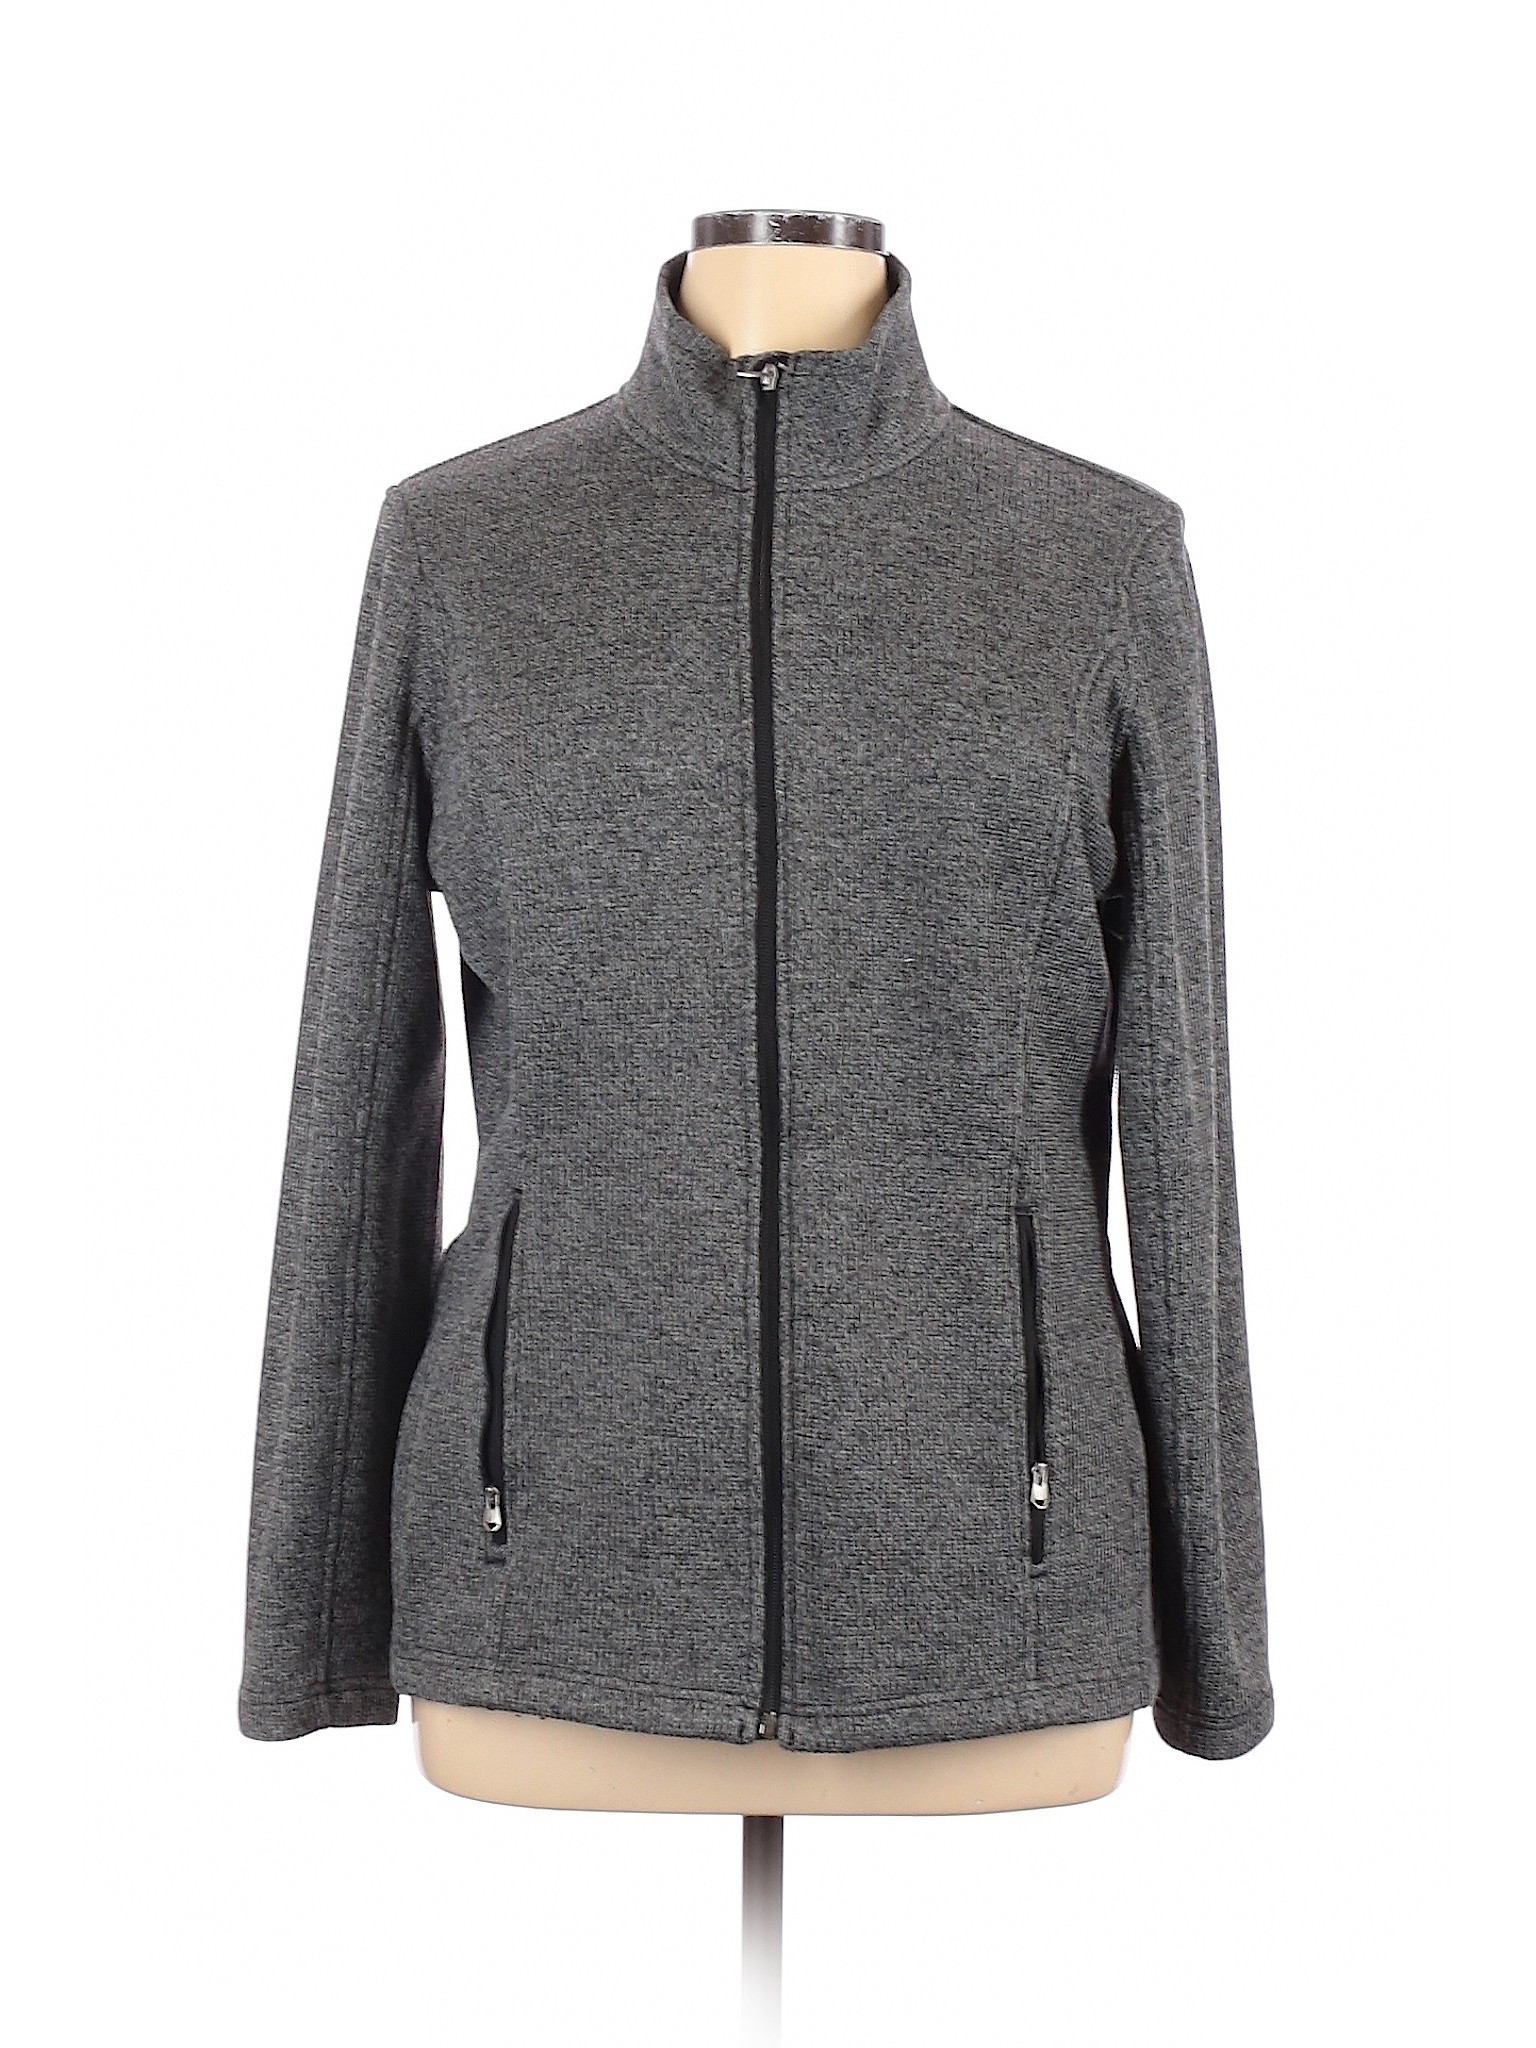 Spyder Women Gray Jacket XL | eBay